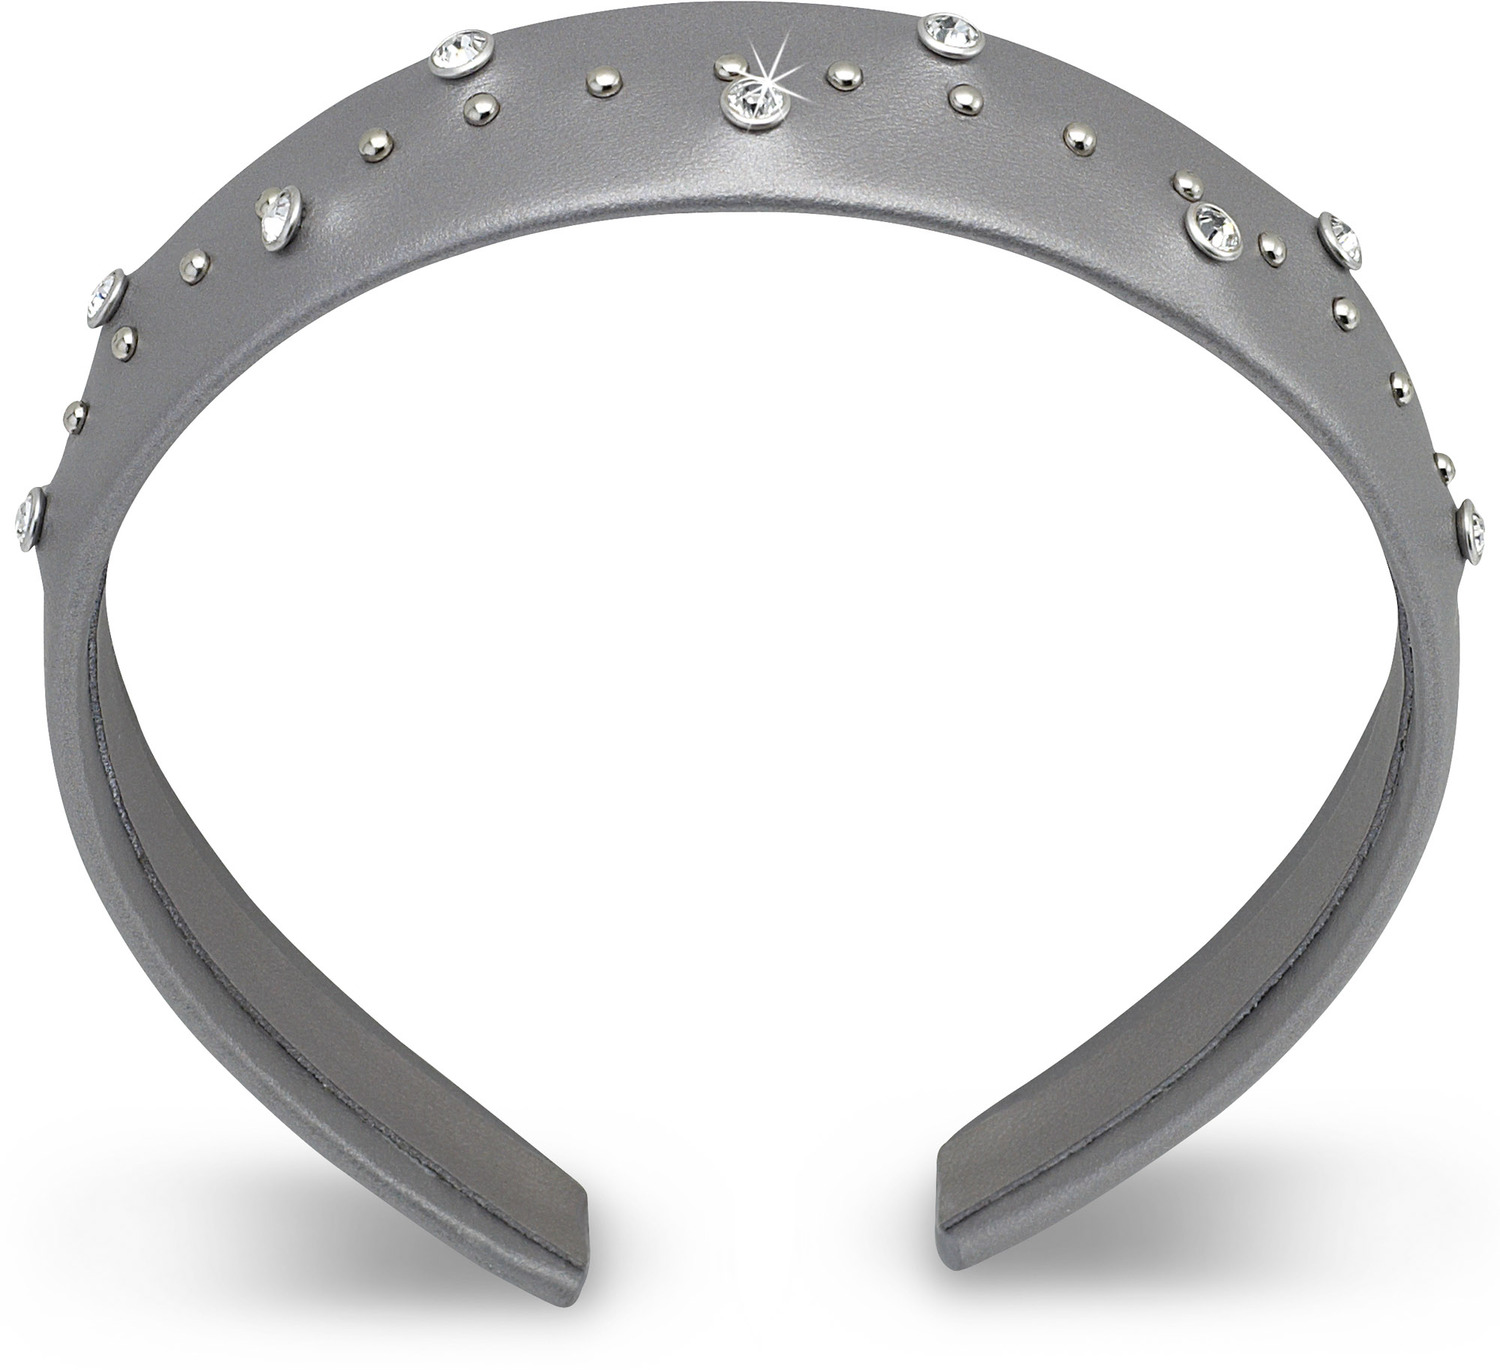 Silver Dazzle Headband by LAYLA - Silver Dazzle Headband - 5" x 5.25" Genuine Leather Handband